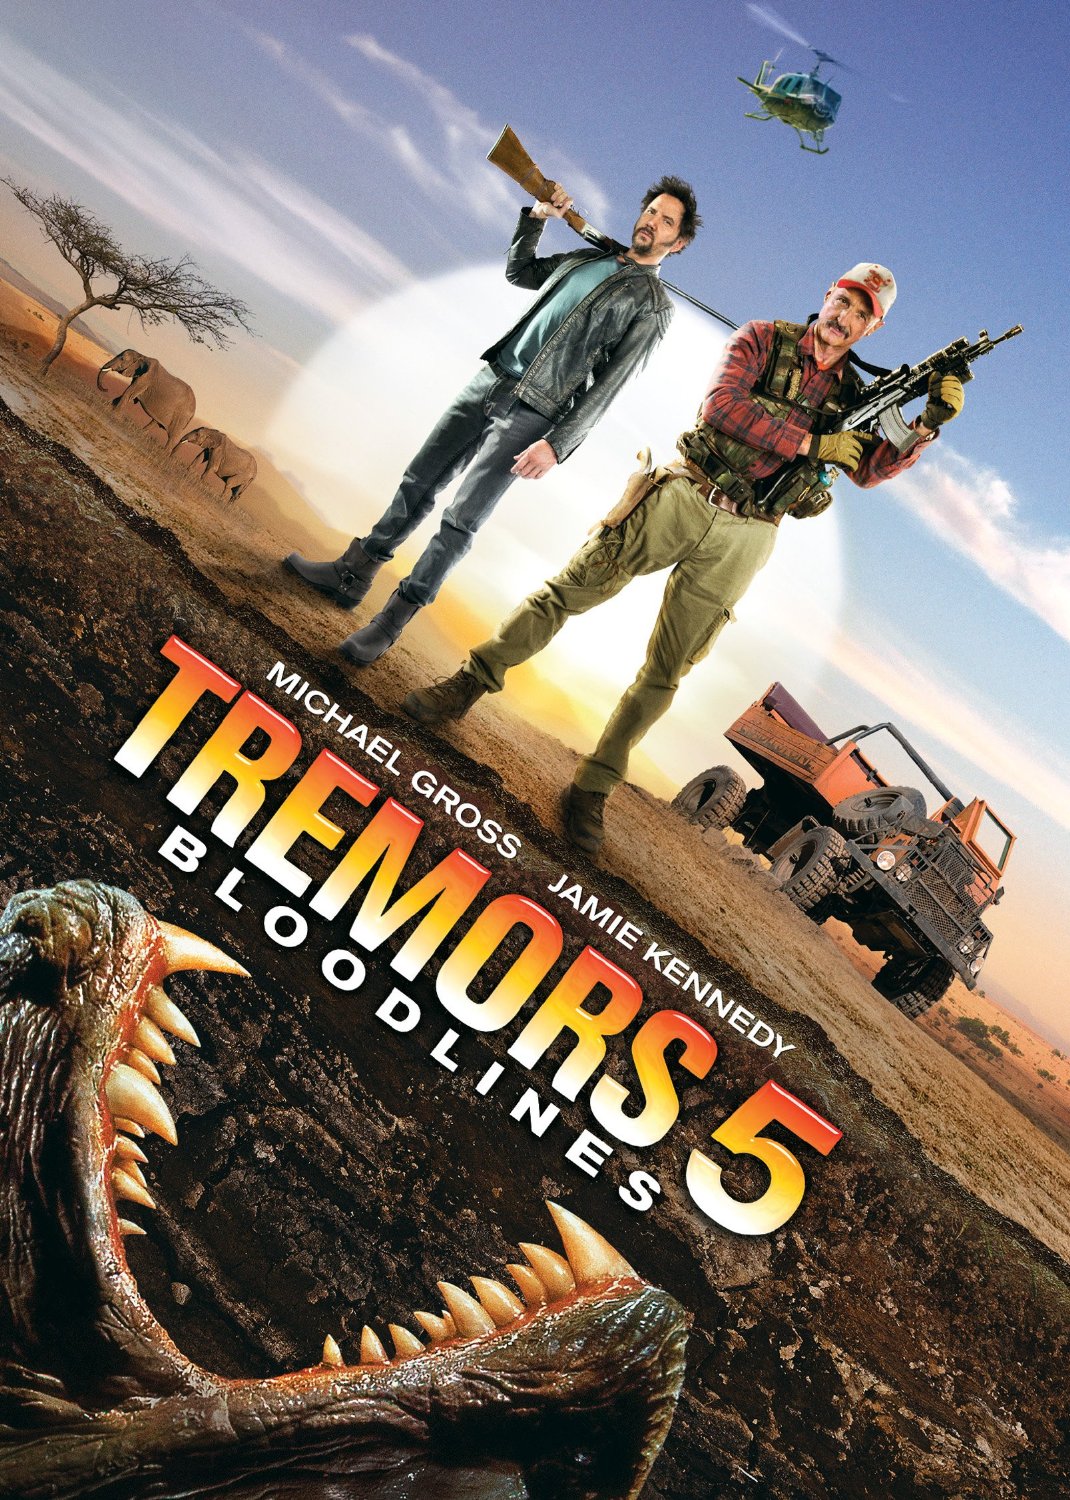 Tremors 5 Bloodlines (2015) starring Michael Gross, Jamie Kennedy